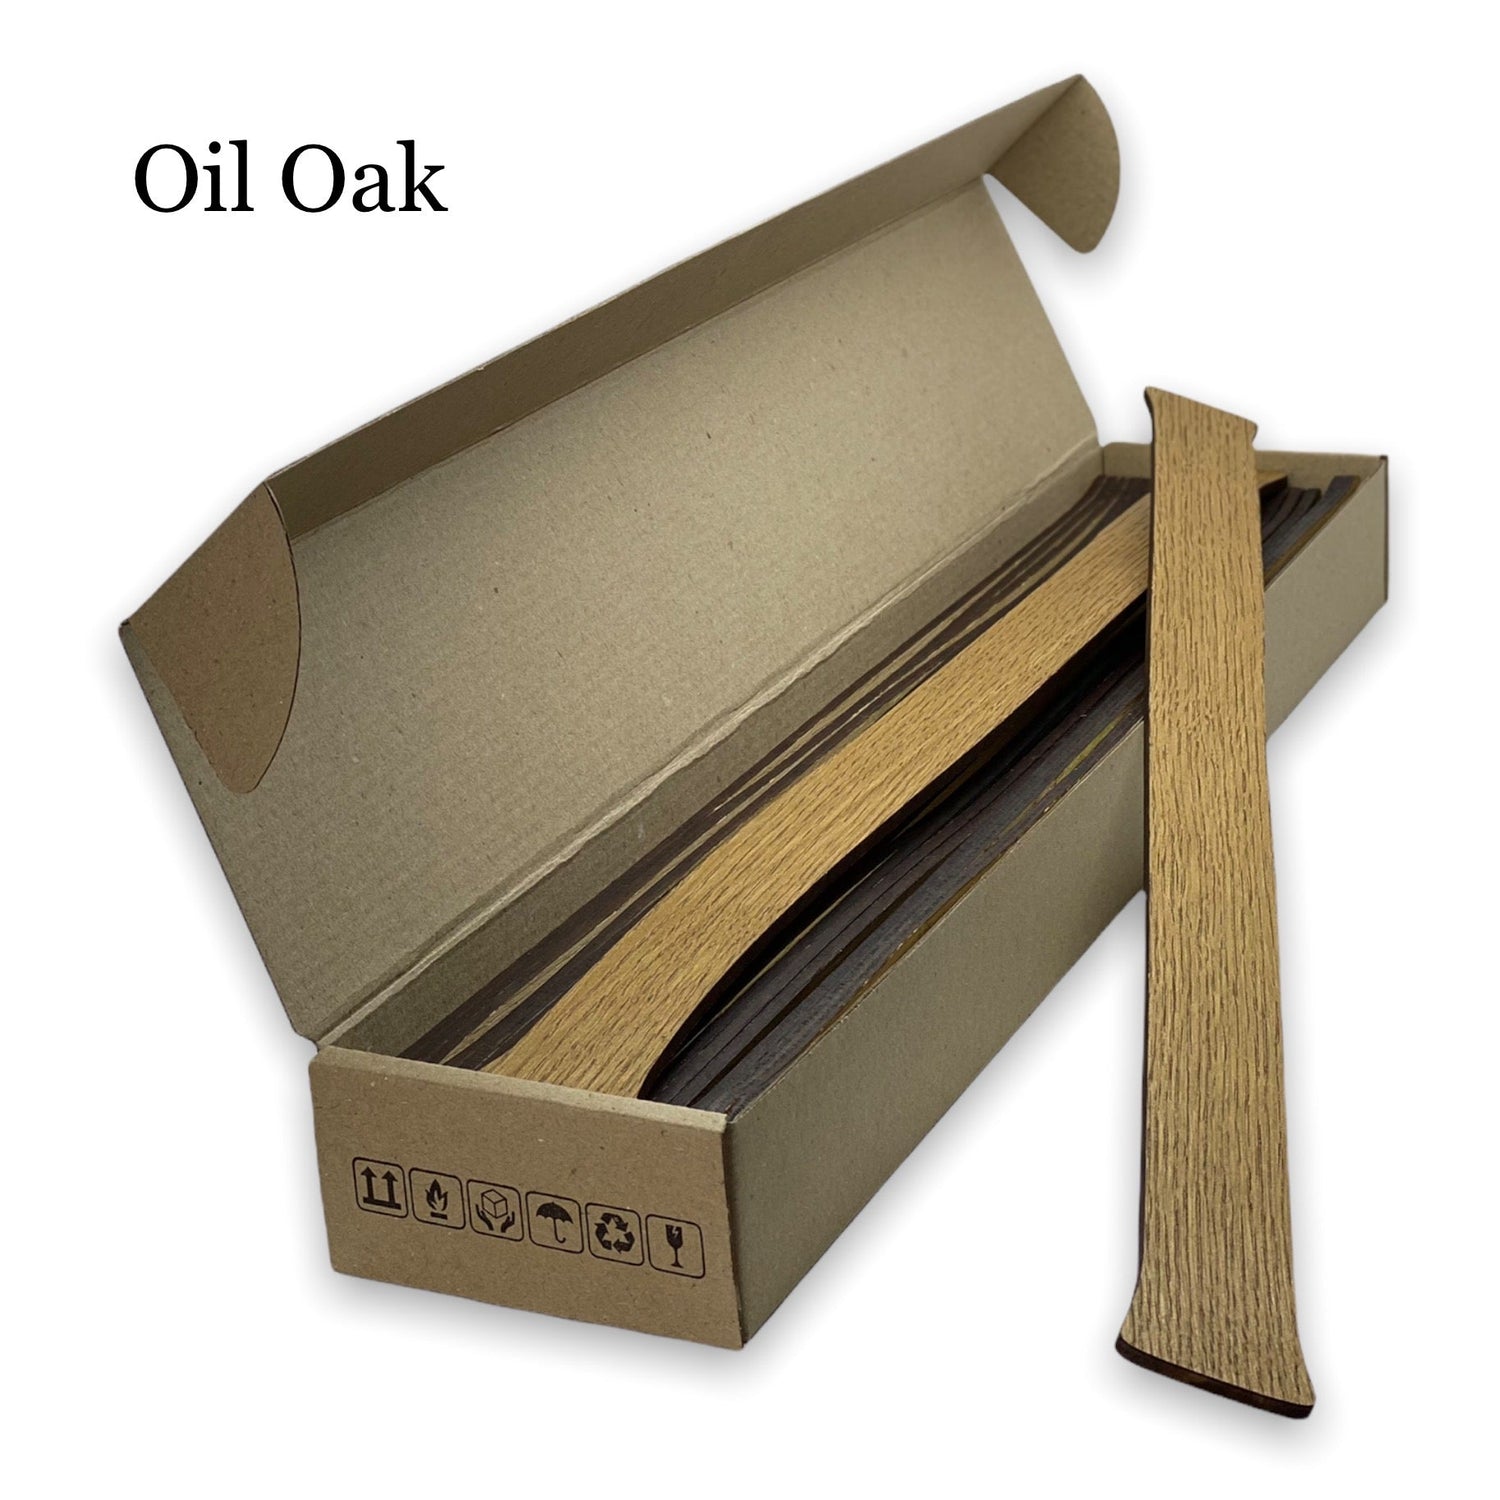 Oil Oak Bamboo Panel Wall Slats, 24 pcs in box. Artvoom Wall Décor - Artvoom